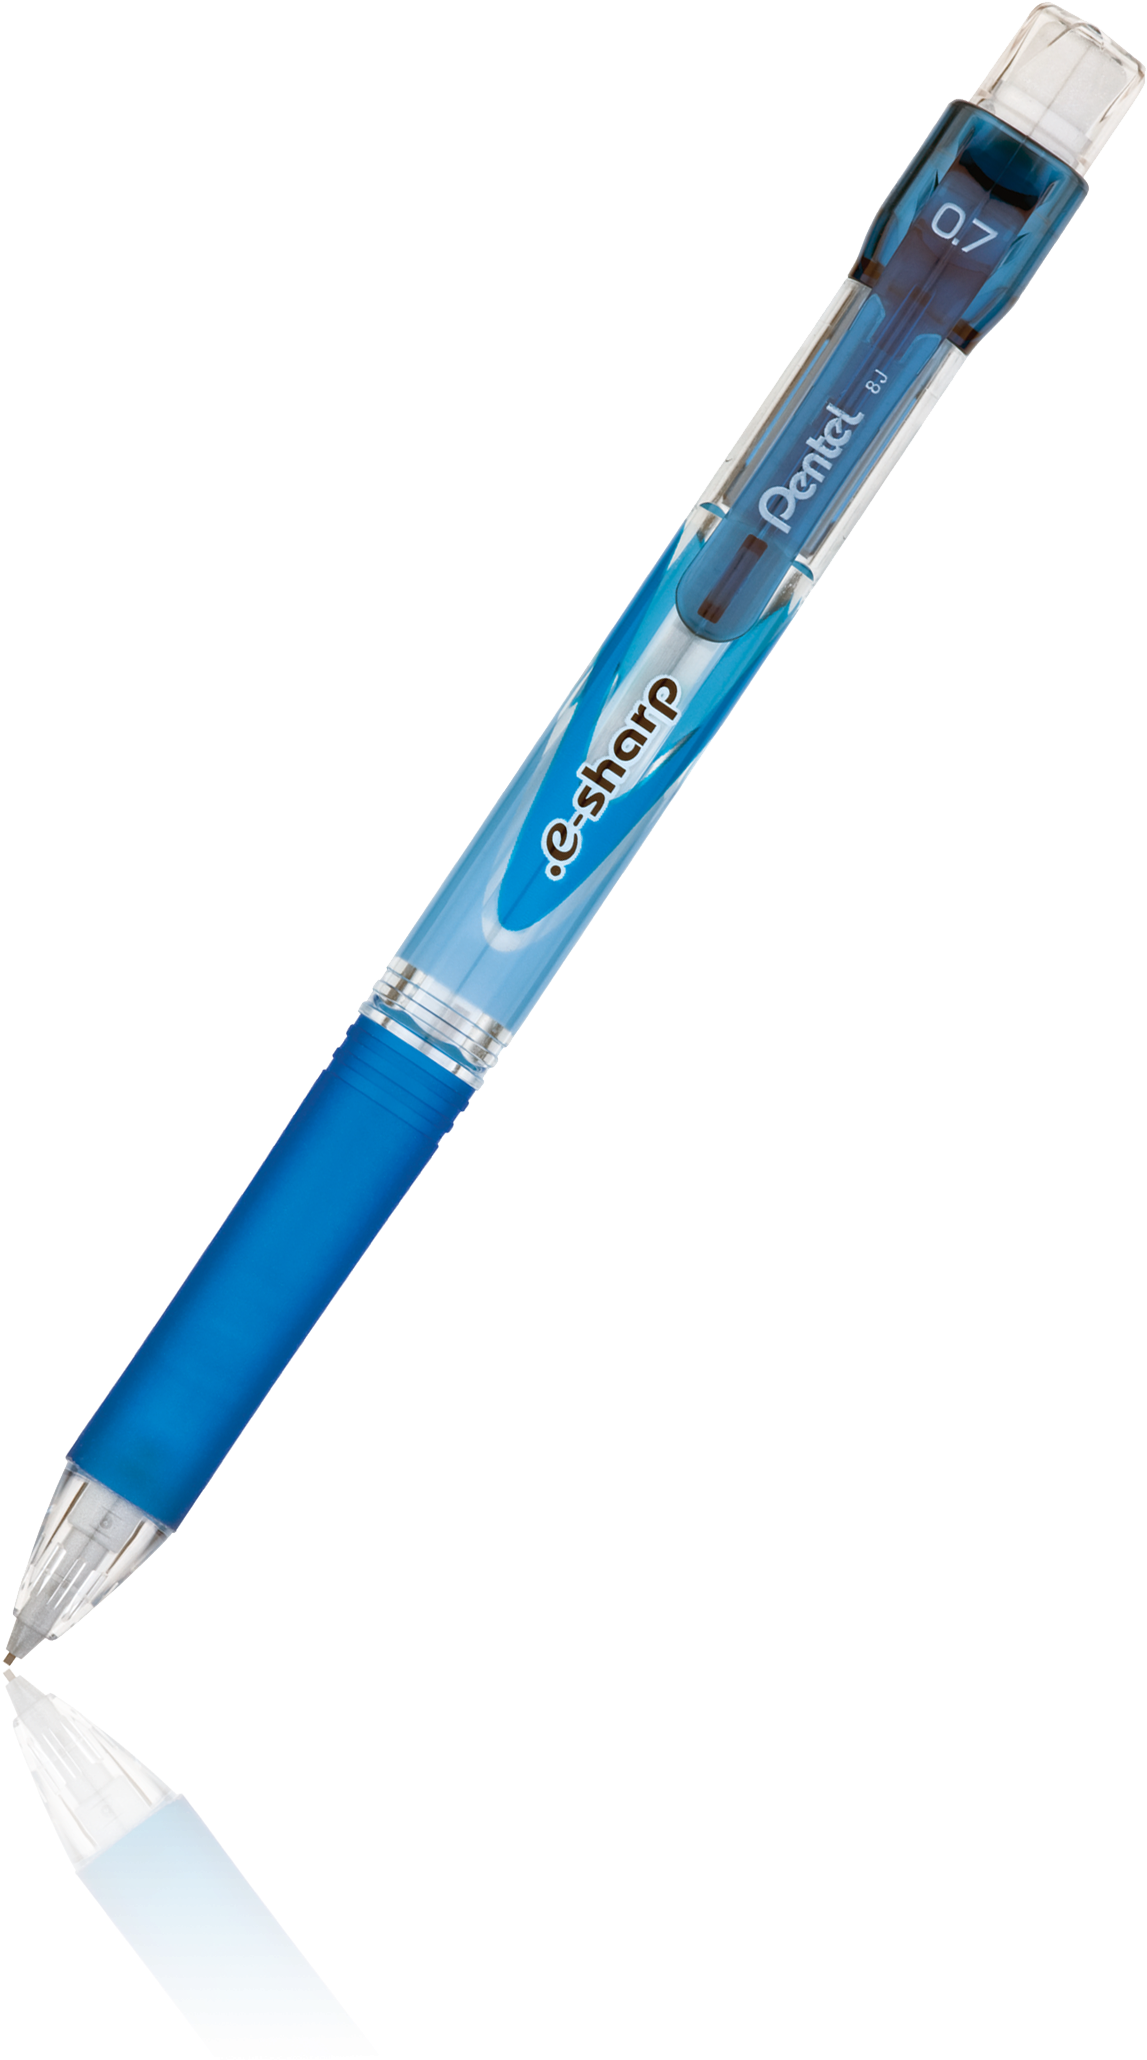 E-sharp™ Mechanical Pencil - E Sharp Mechanical Pencil (1919x2560)